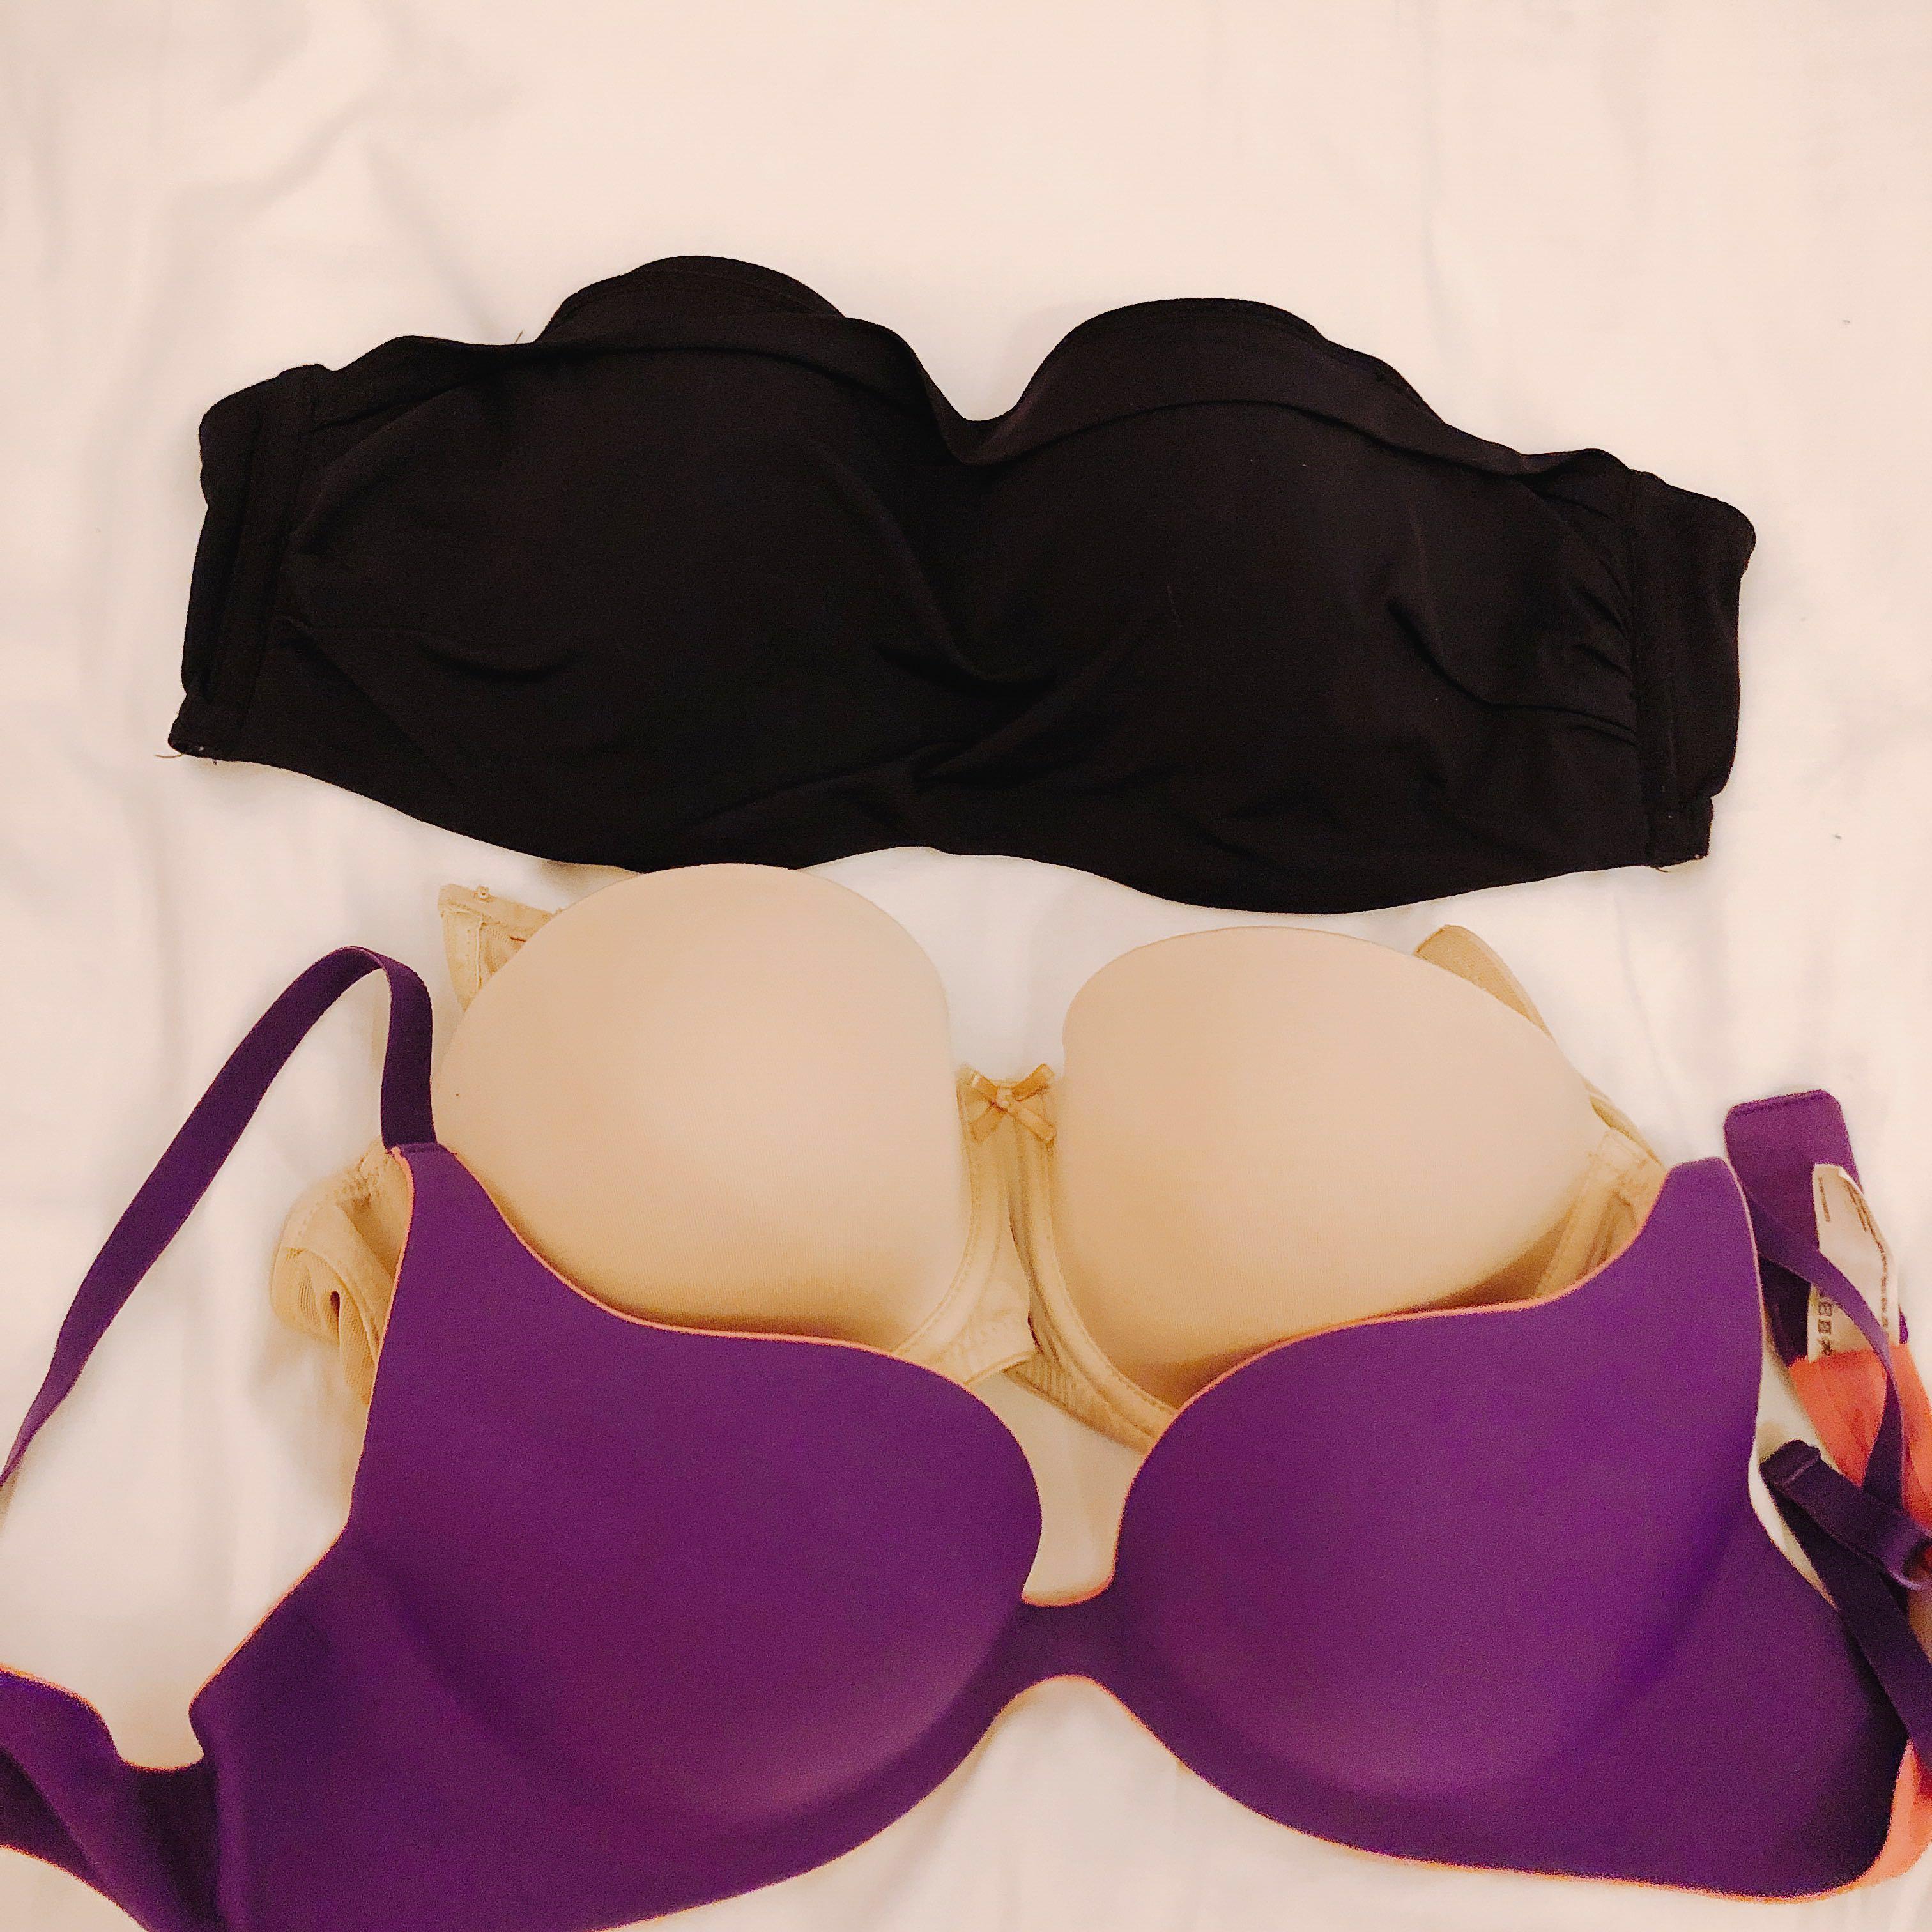 38C &D M& S Plus size bra& Victoria secret 34DD, Women's Fashion, New  Undergarments & Loungewear on Carousell